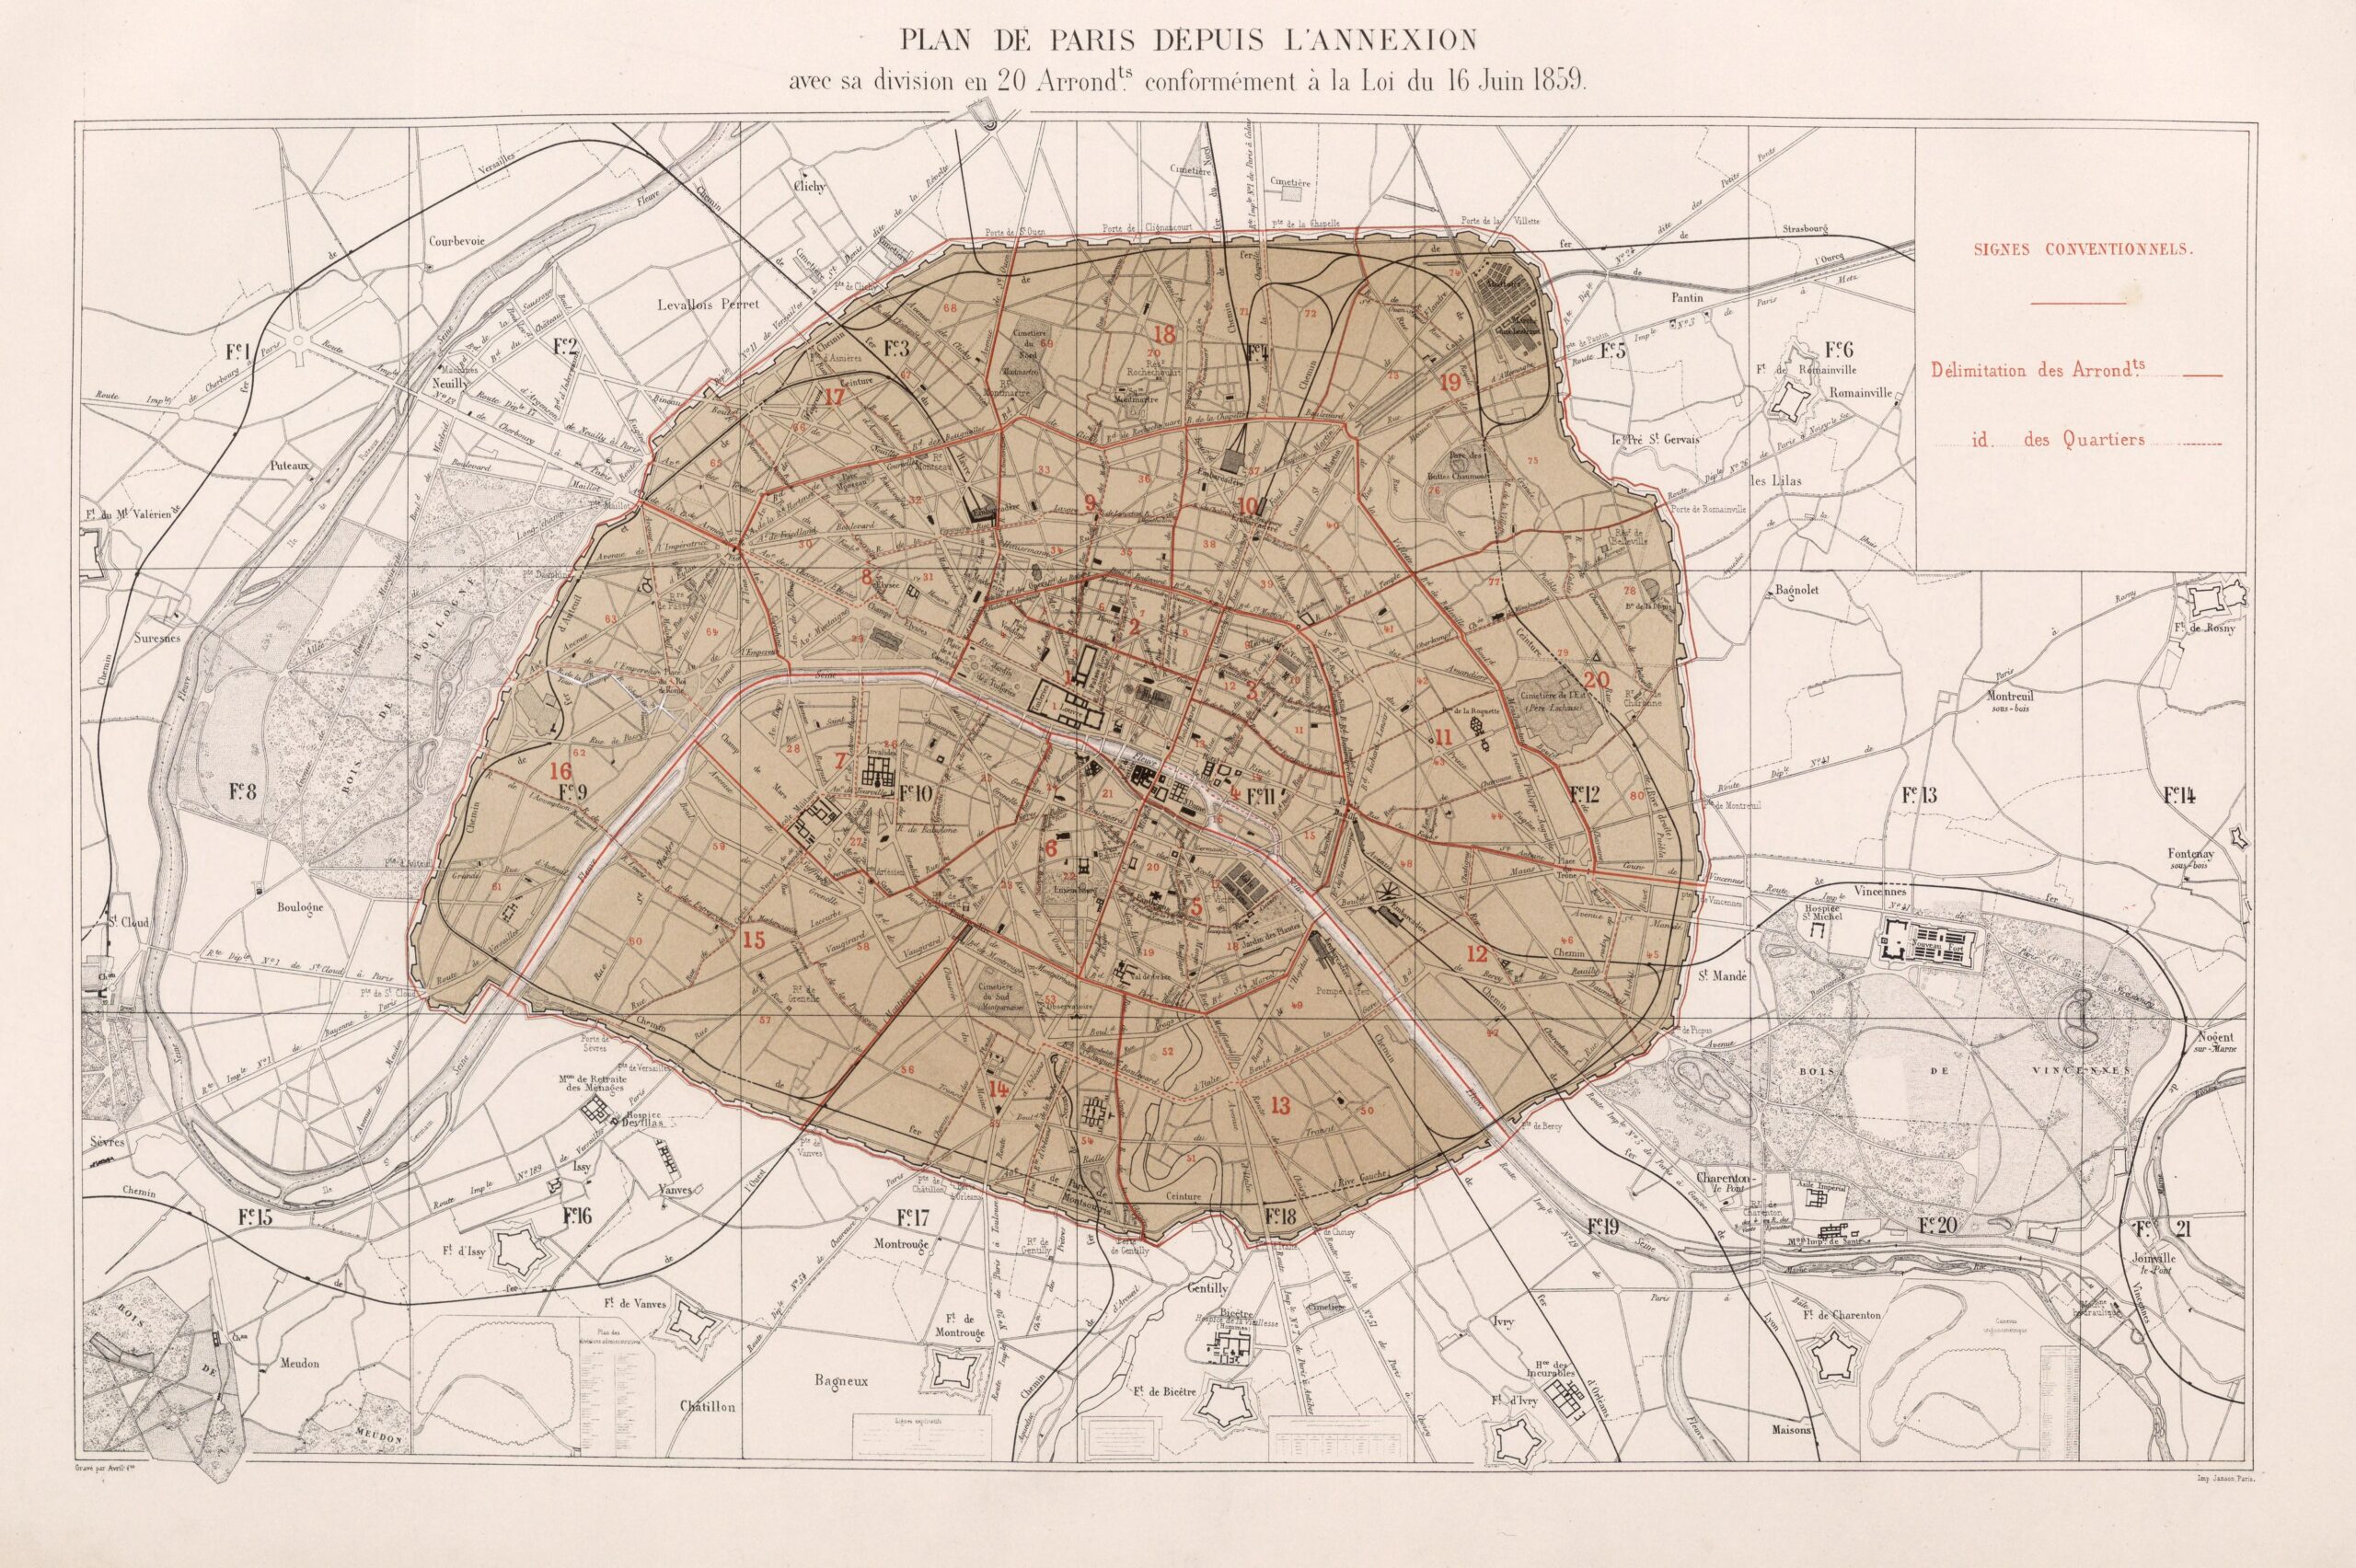 Plan de París tras la anexión (1859)